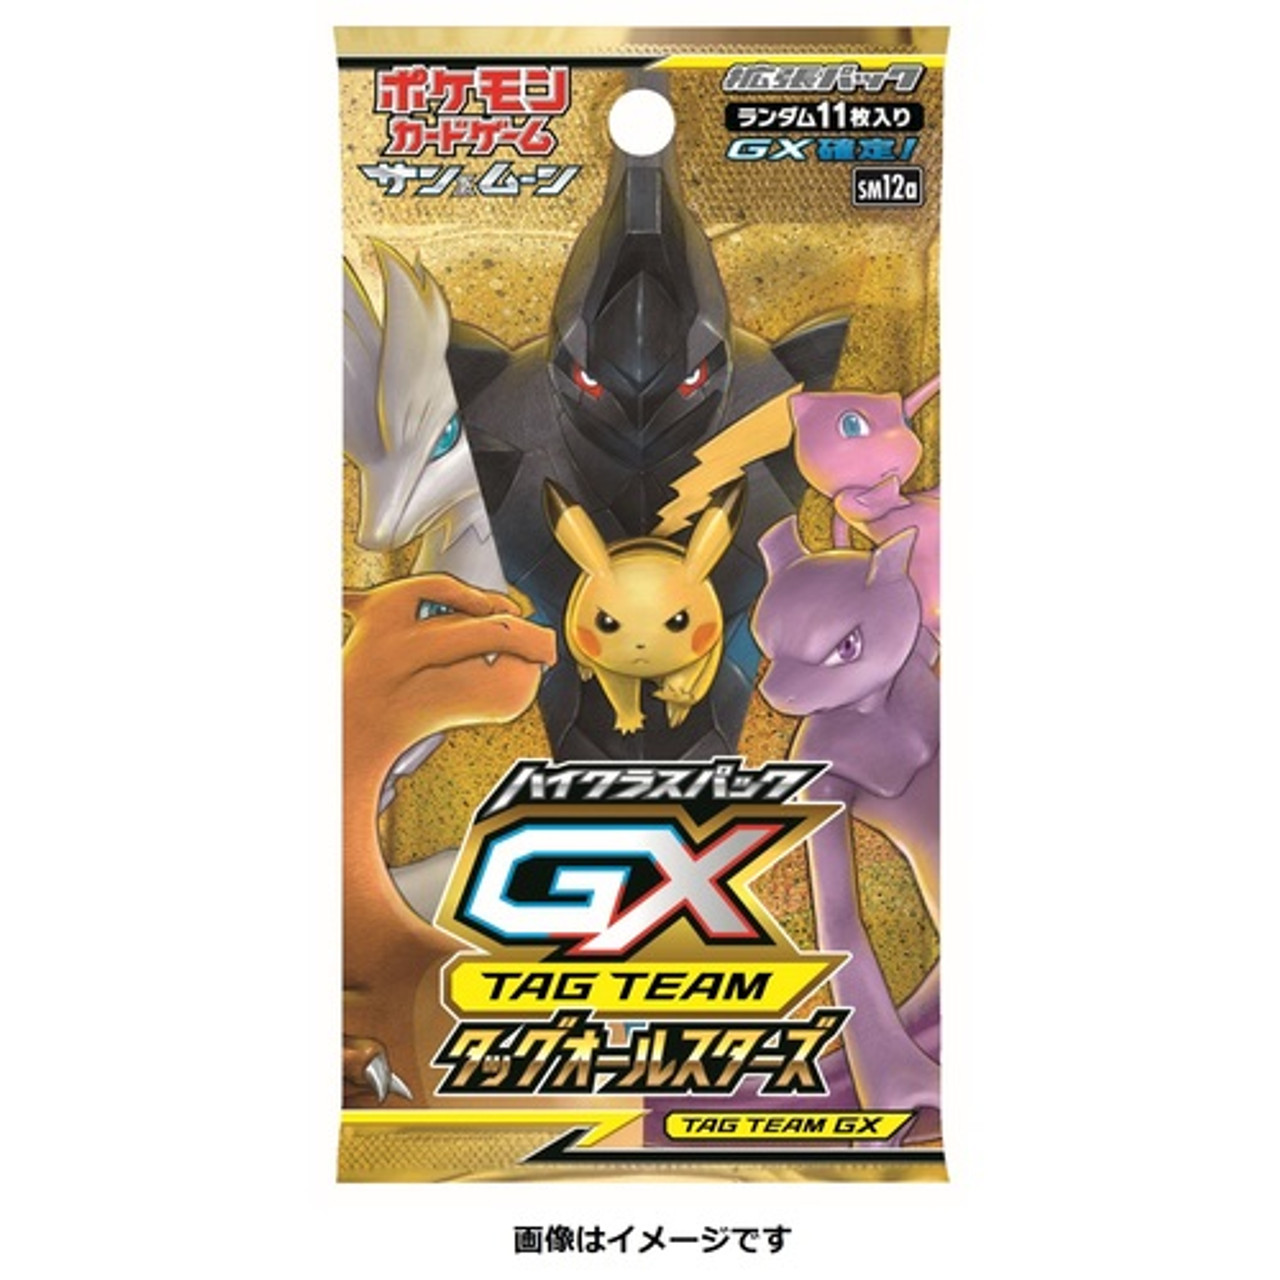  Pokemon Gx Cards